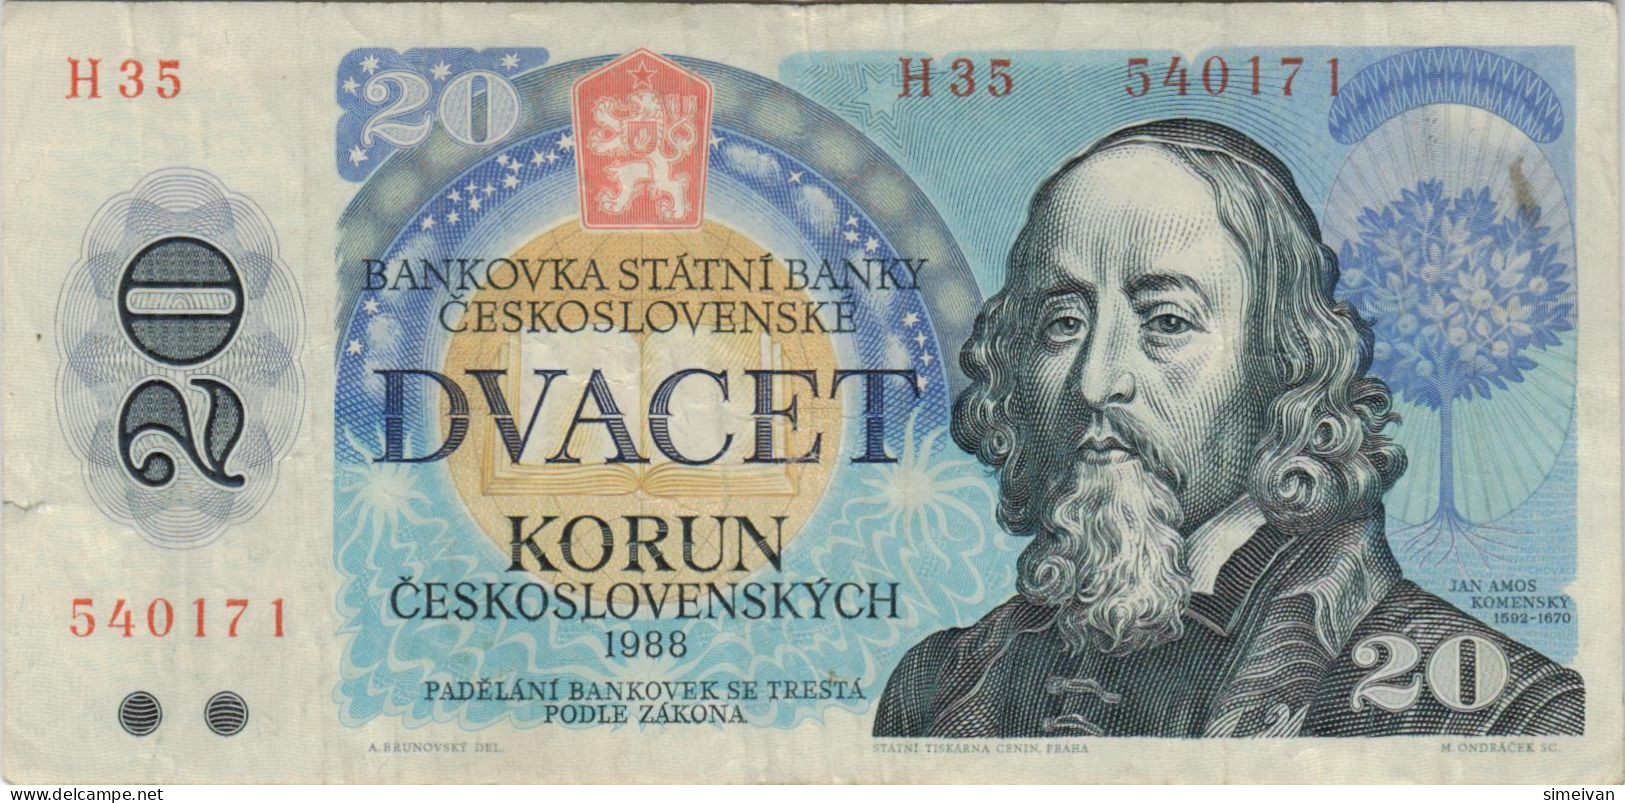 Czechoslovakia 20 Korun 1988 P-95b Banknote Europe Currency Tchécoslovaquie Tschechoslowakei #5257 - Tschechoslowakei